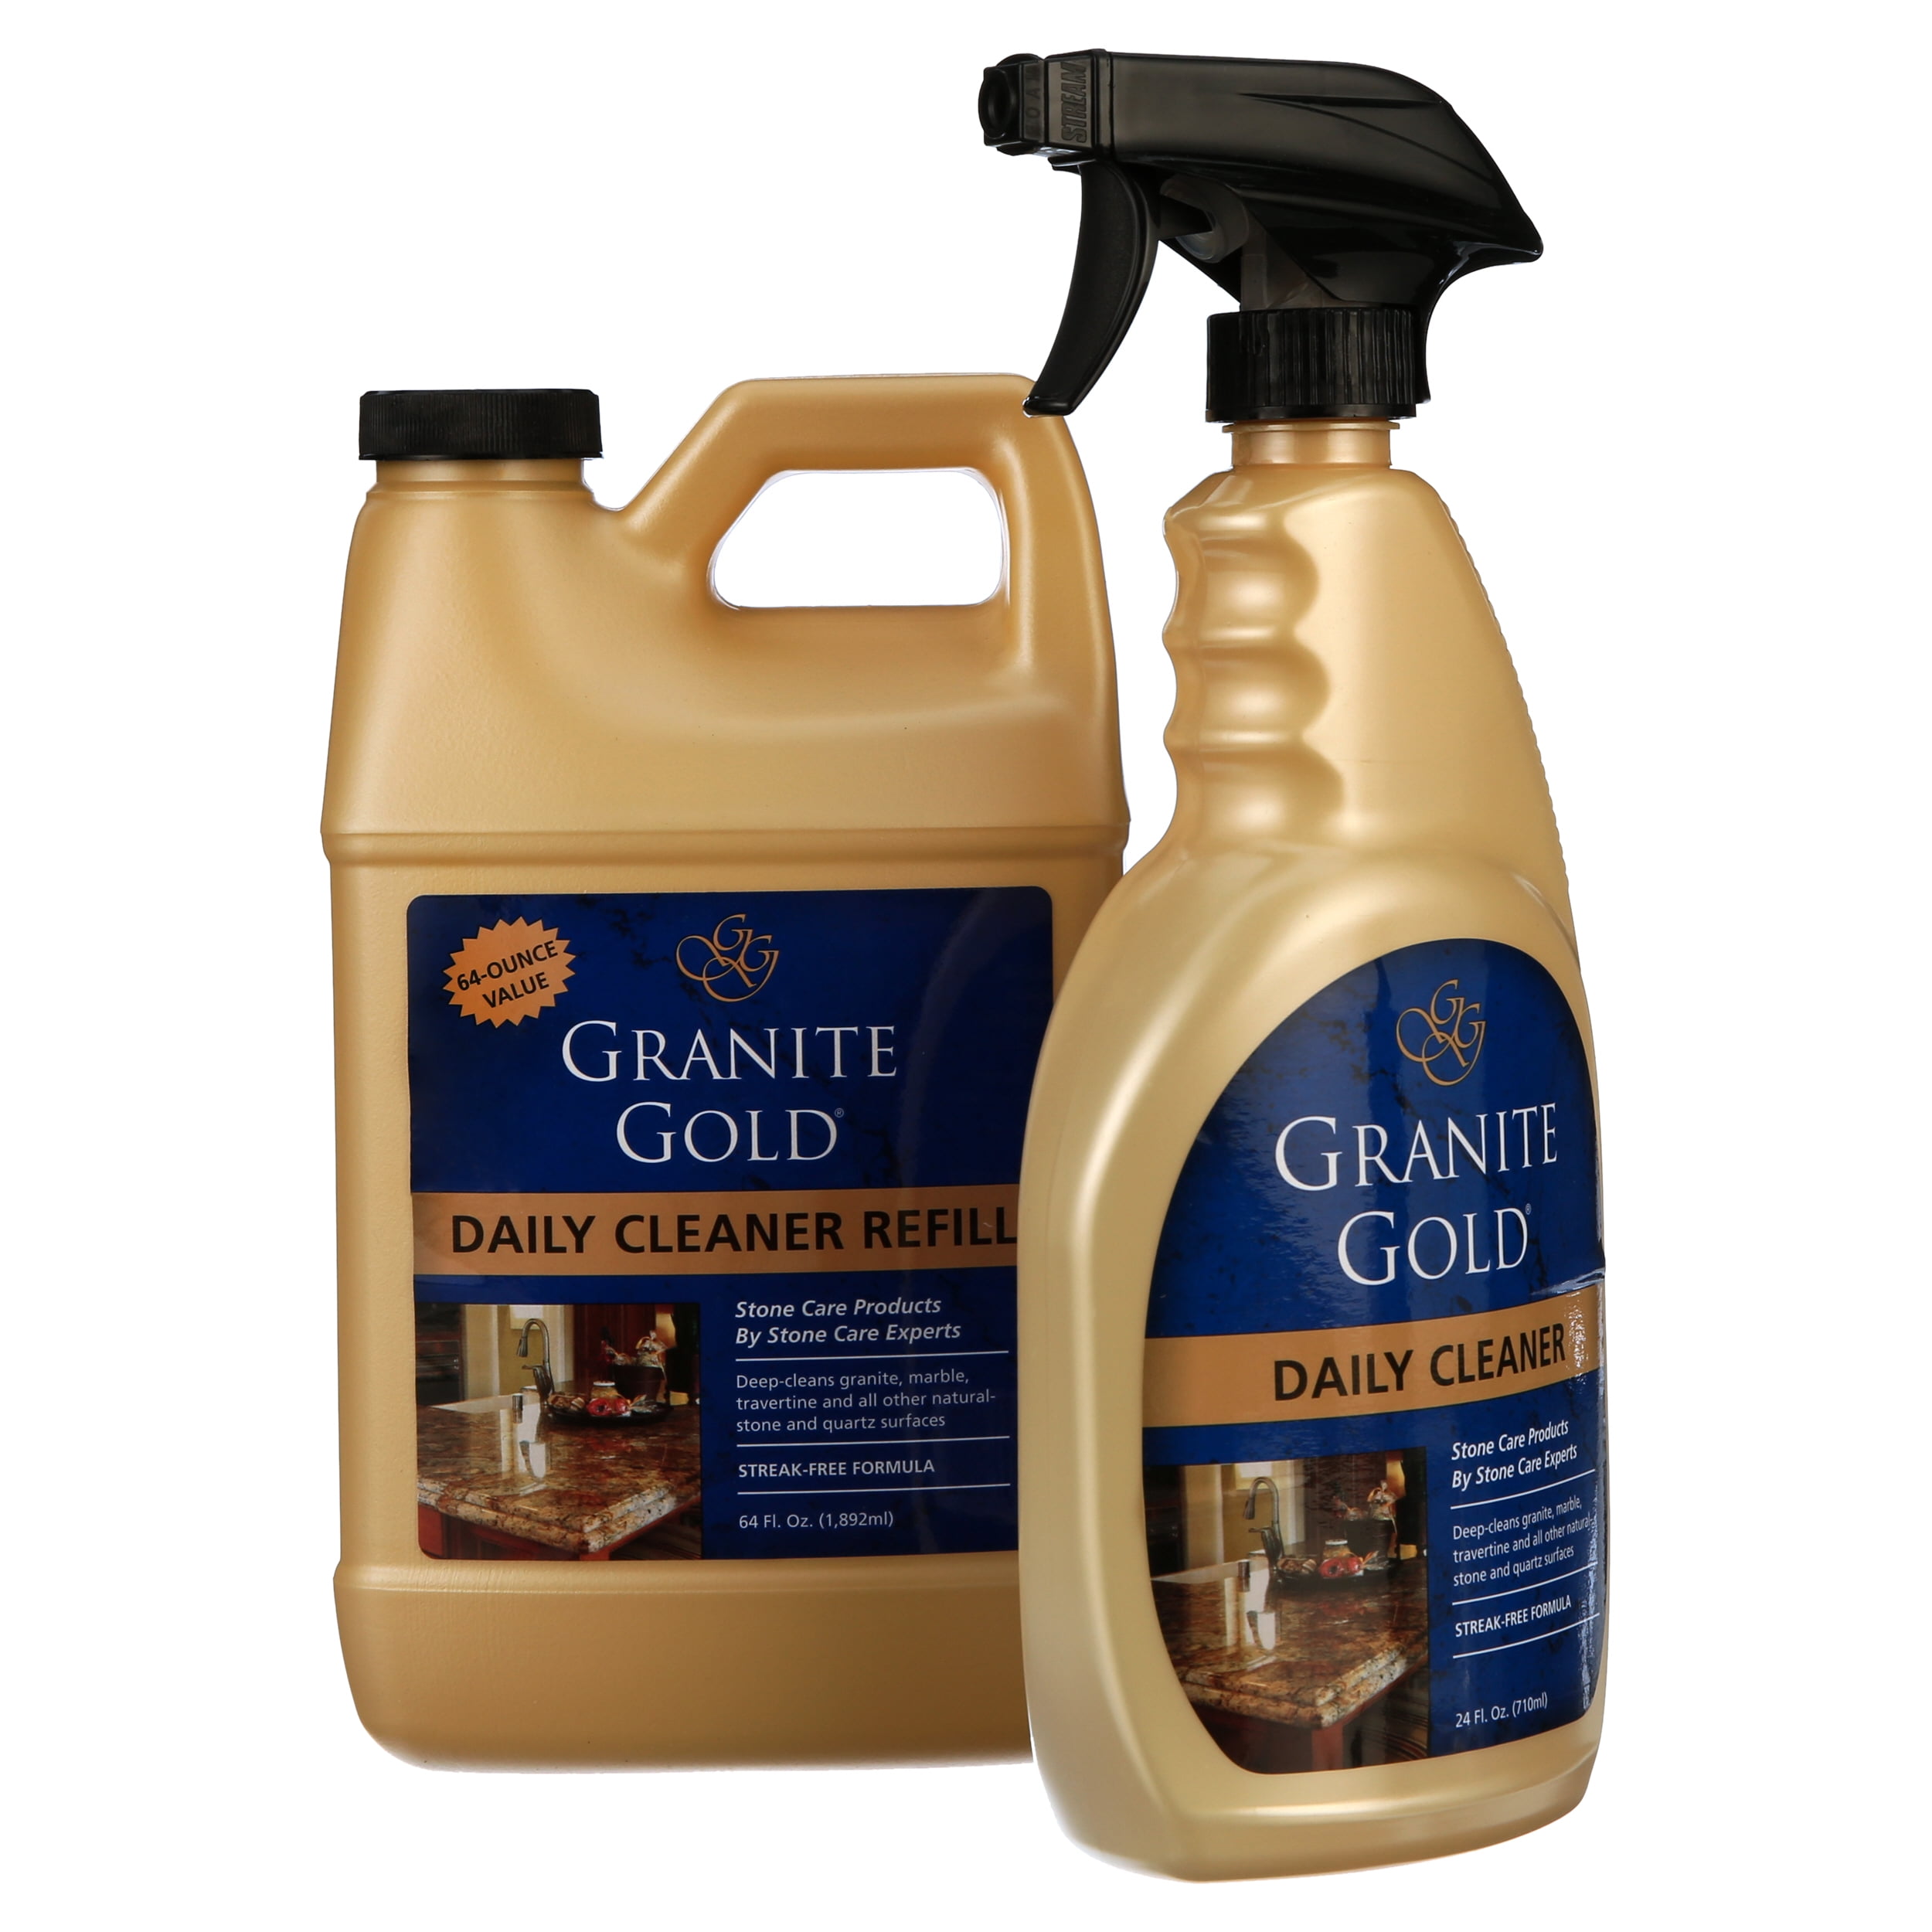 Granite Gold, Daily Cleaner, Citrus Scent, 88 fl oz, 2 Count